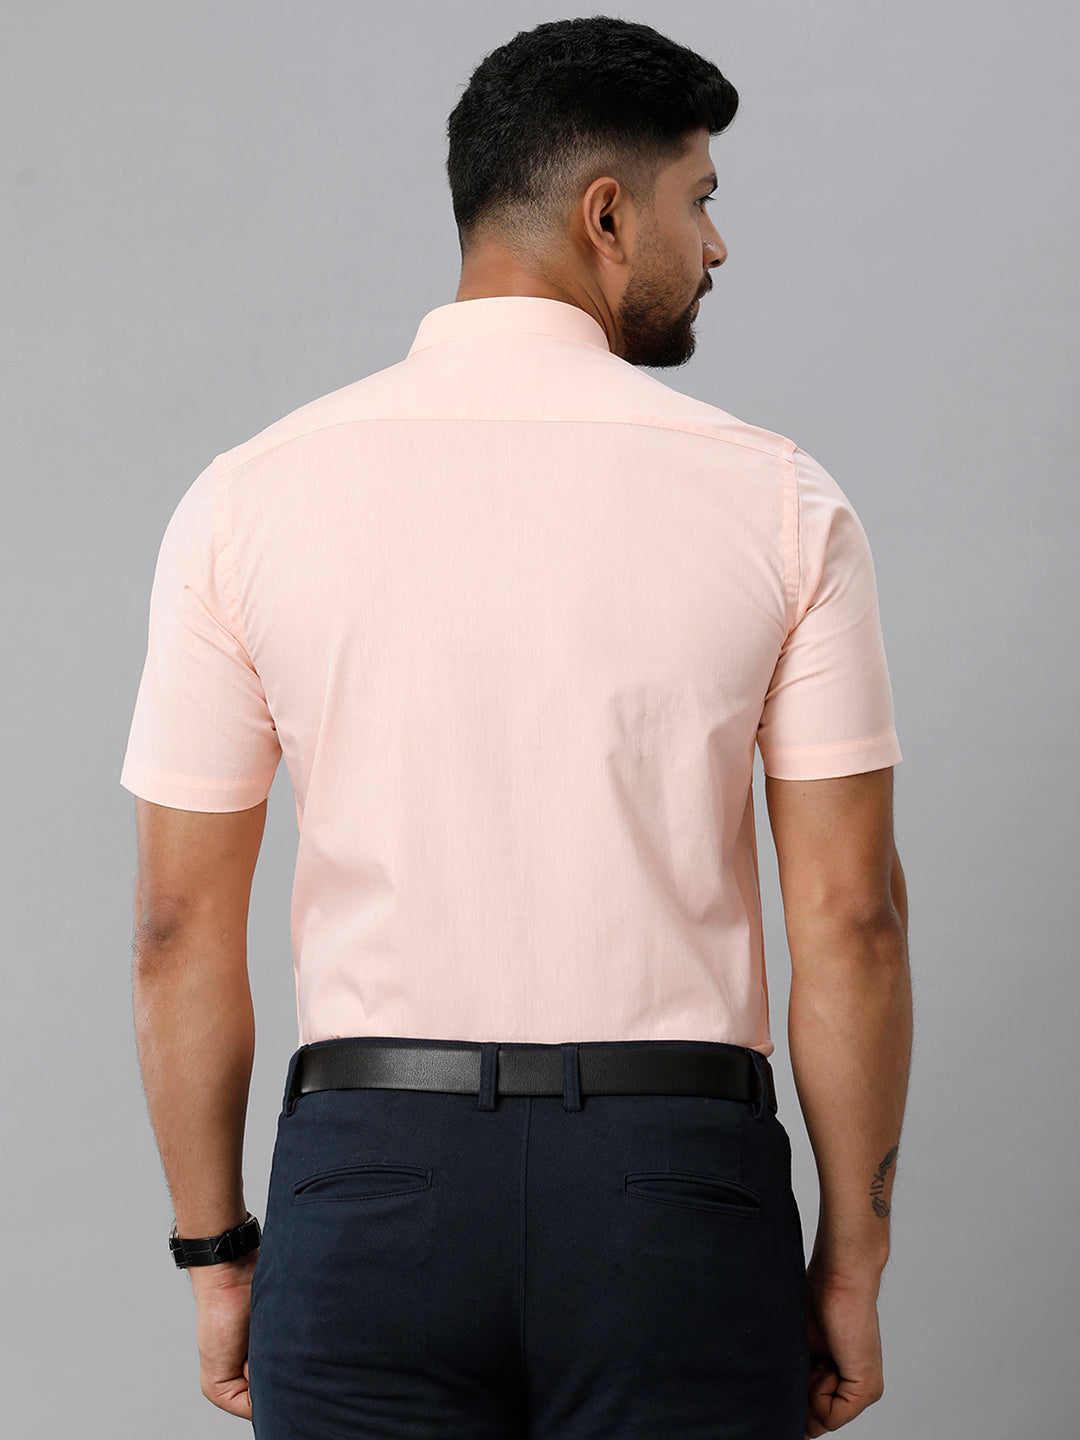 Mens Premium Cotton Formal Shirt Half Sleeves Light Orange MH G117-Back view